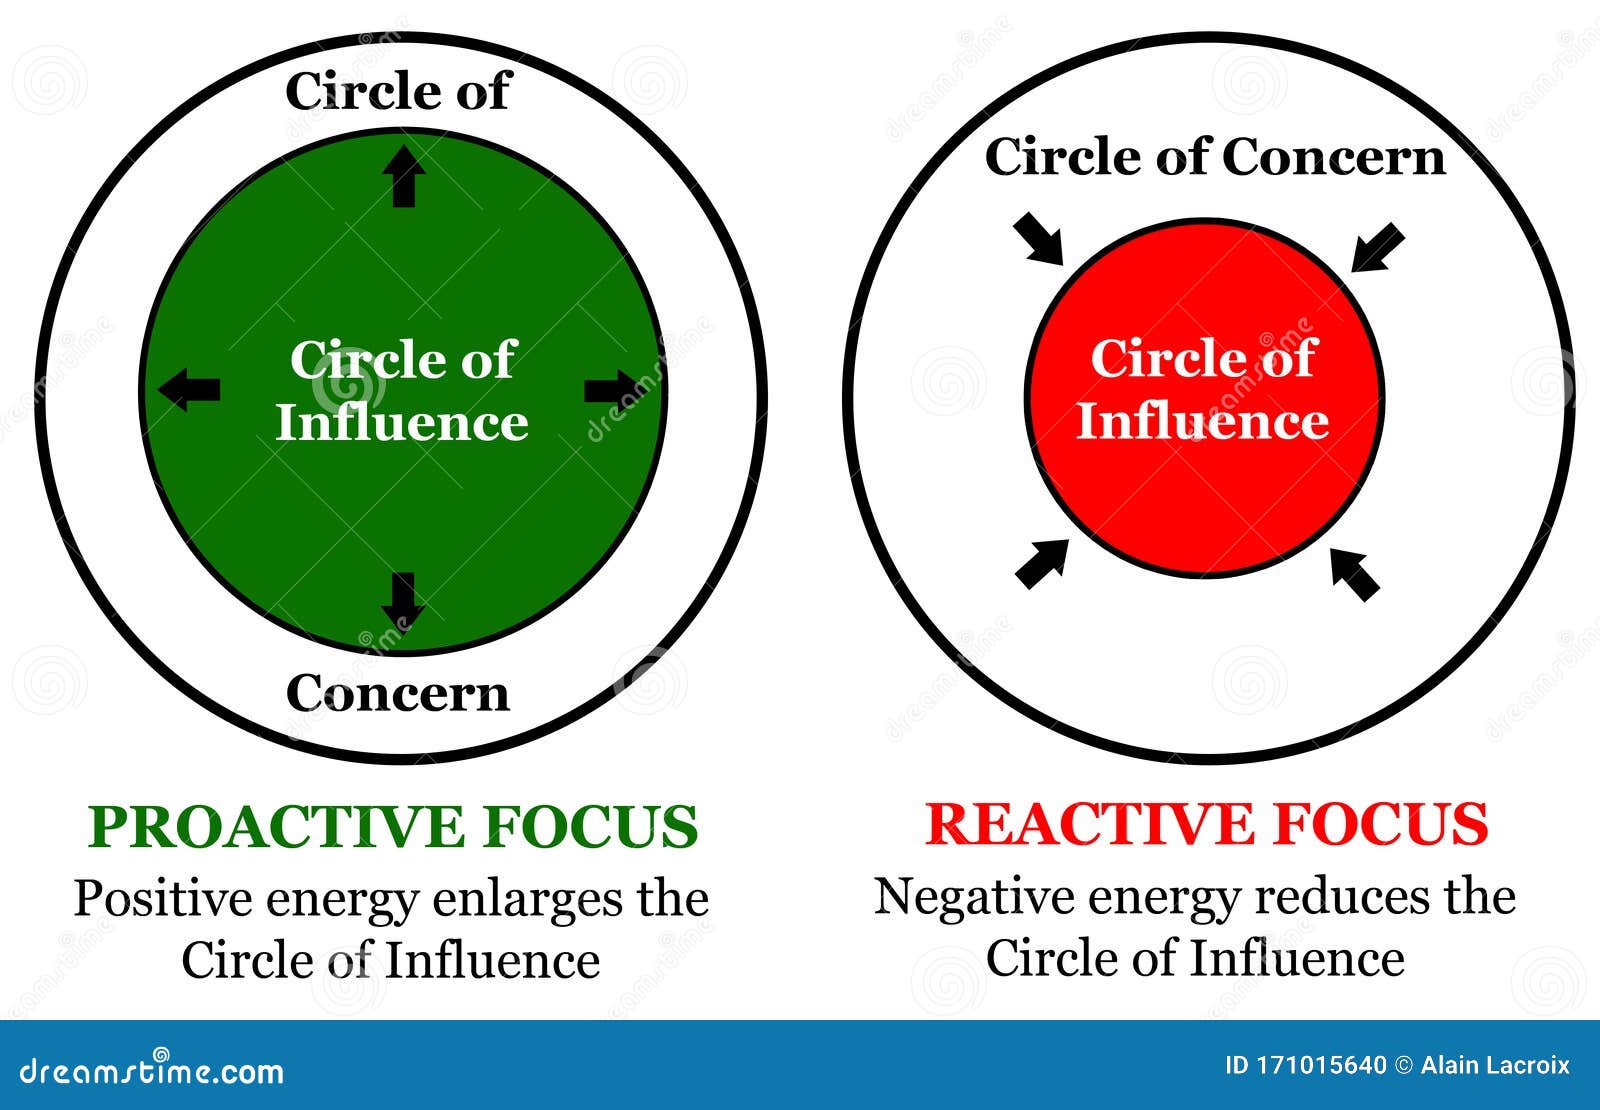 circle influence concern